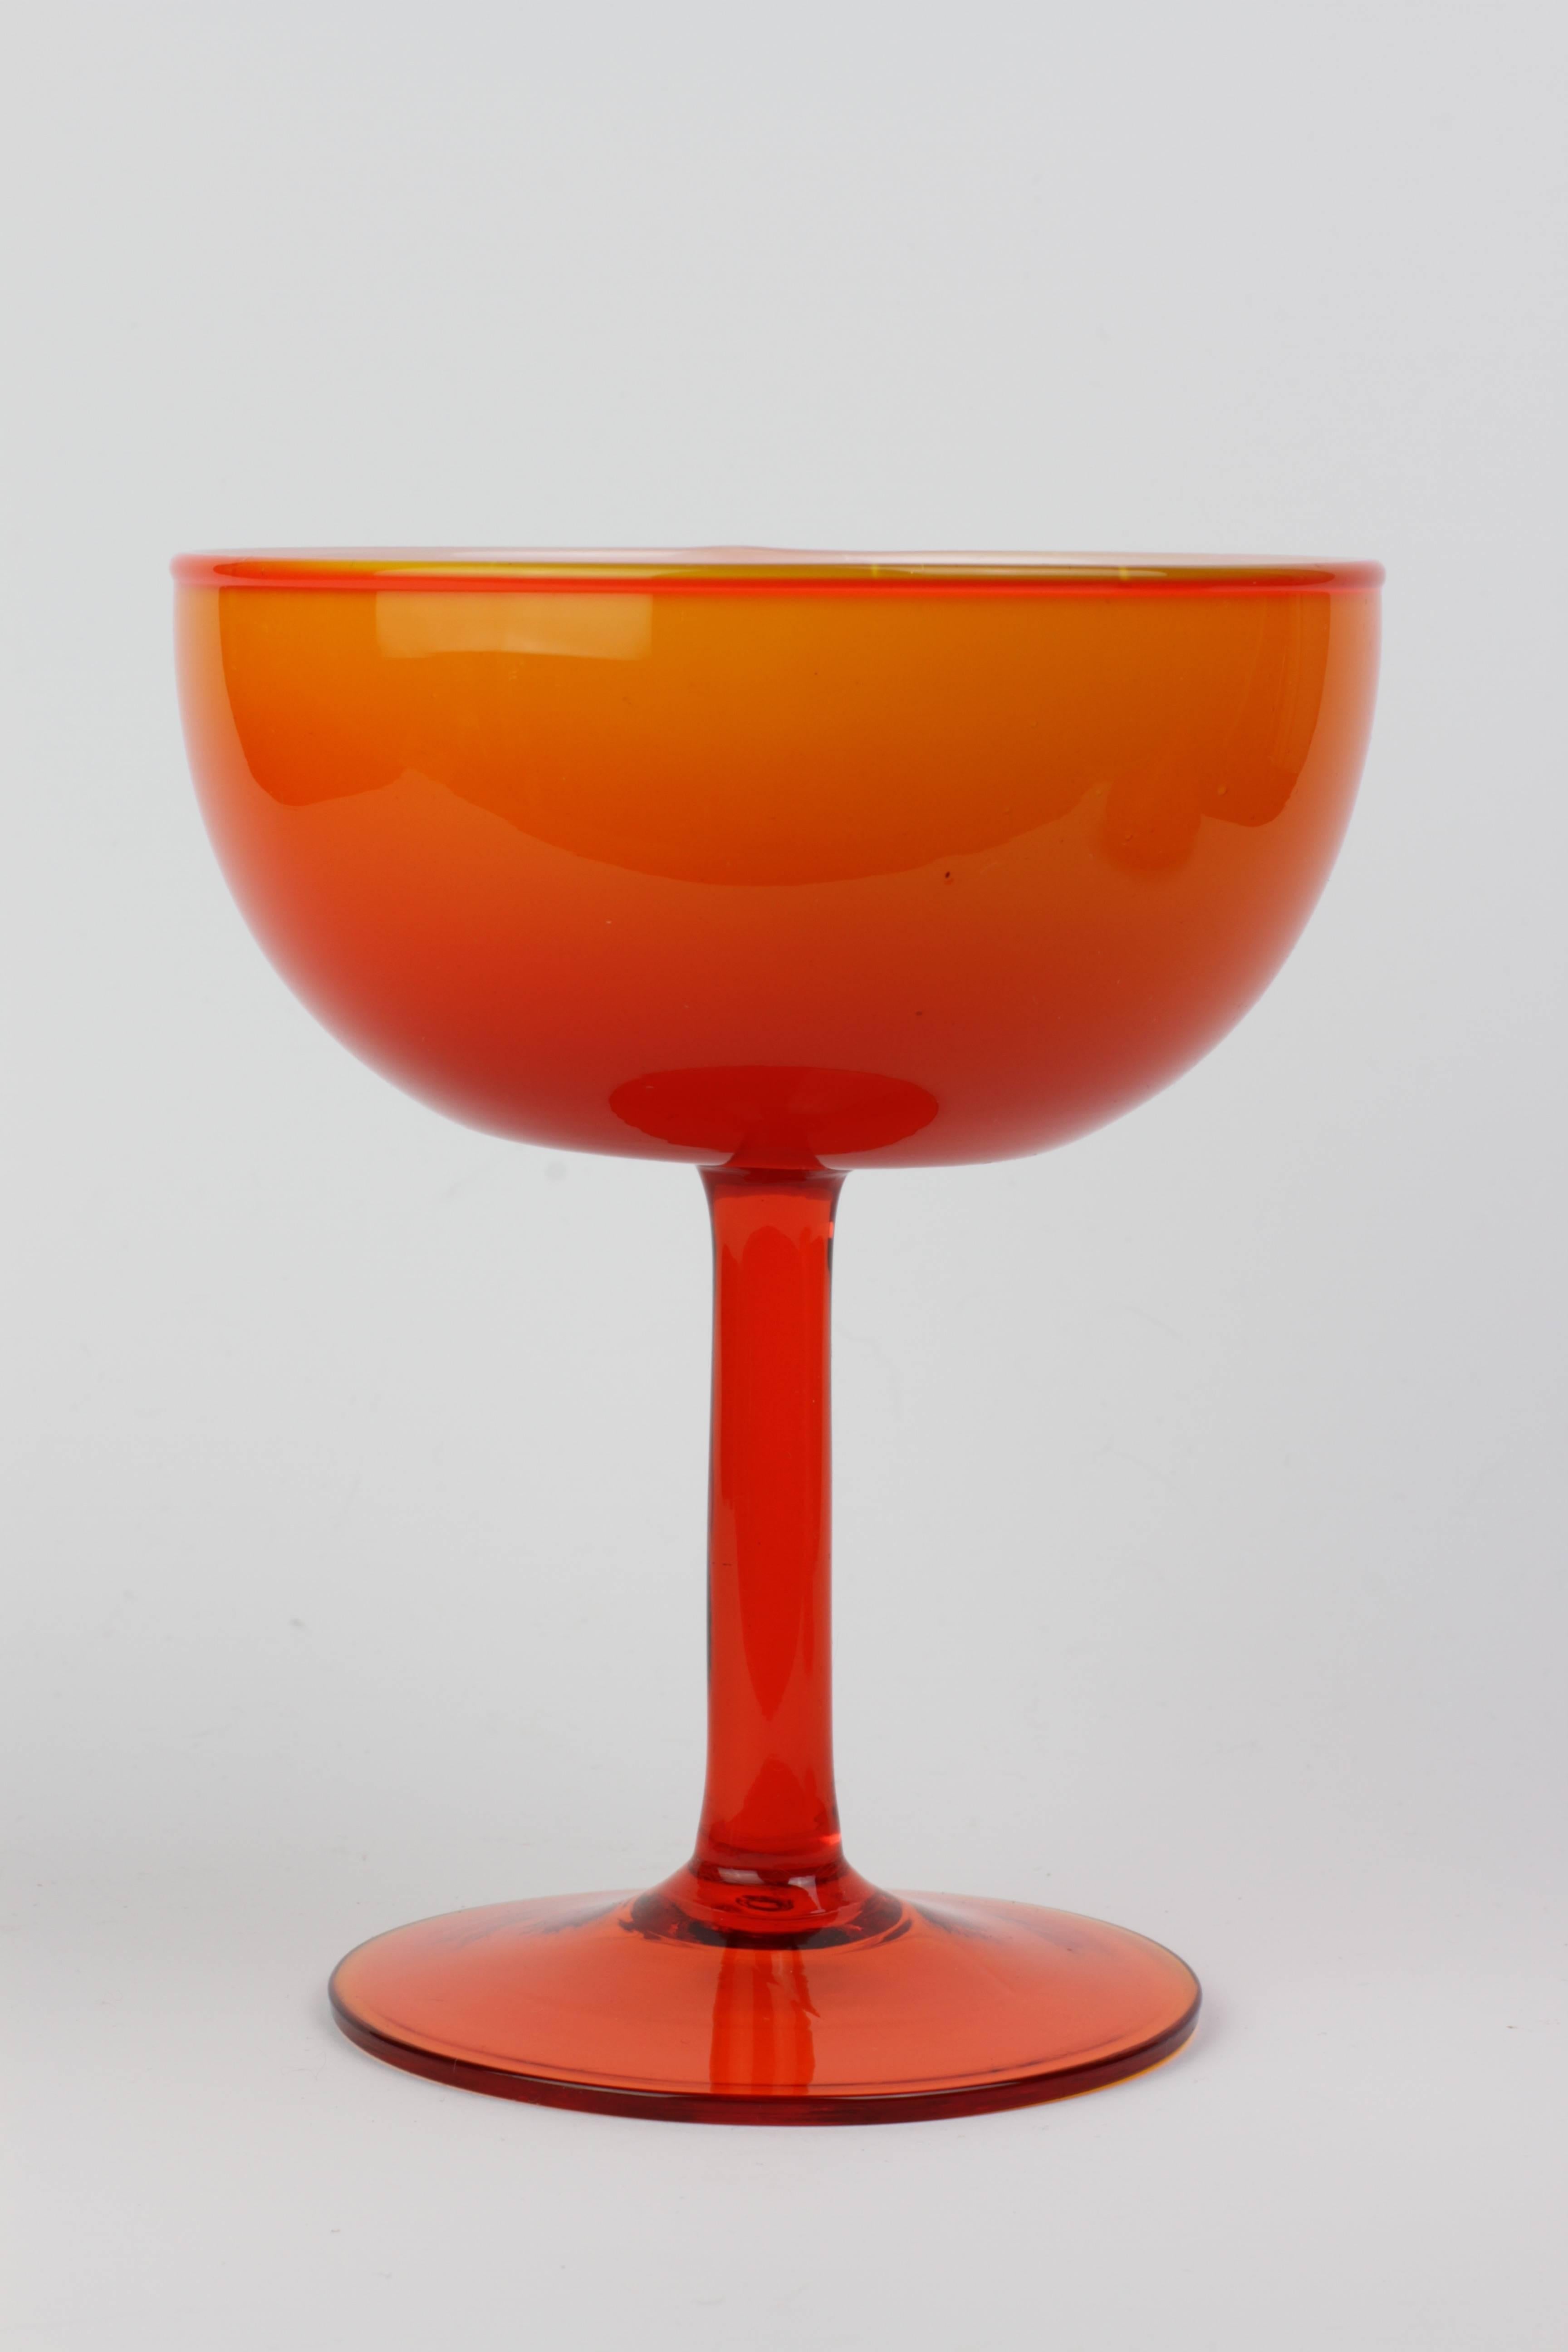 20th Century 1950s Mid-Century Italian Sweet Jar with Lid in Vibrant Orange over White Glass